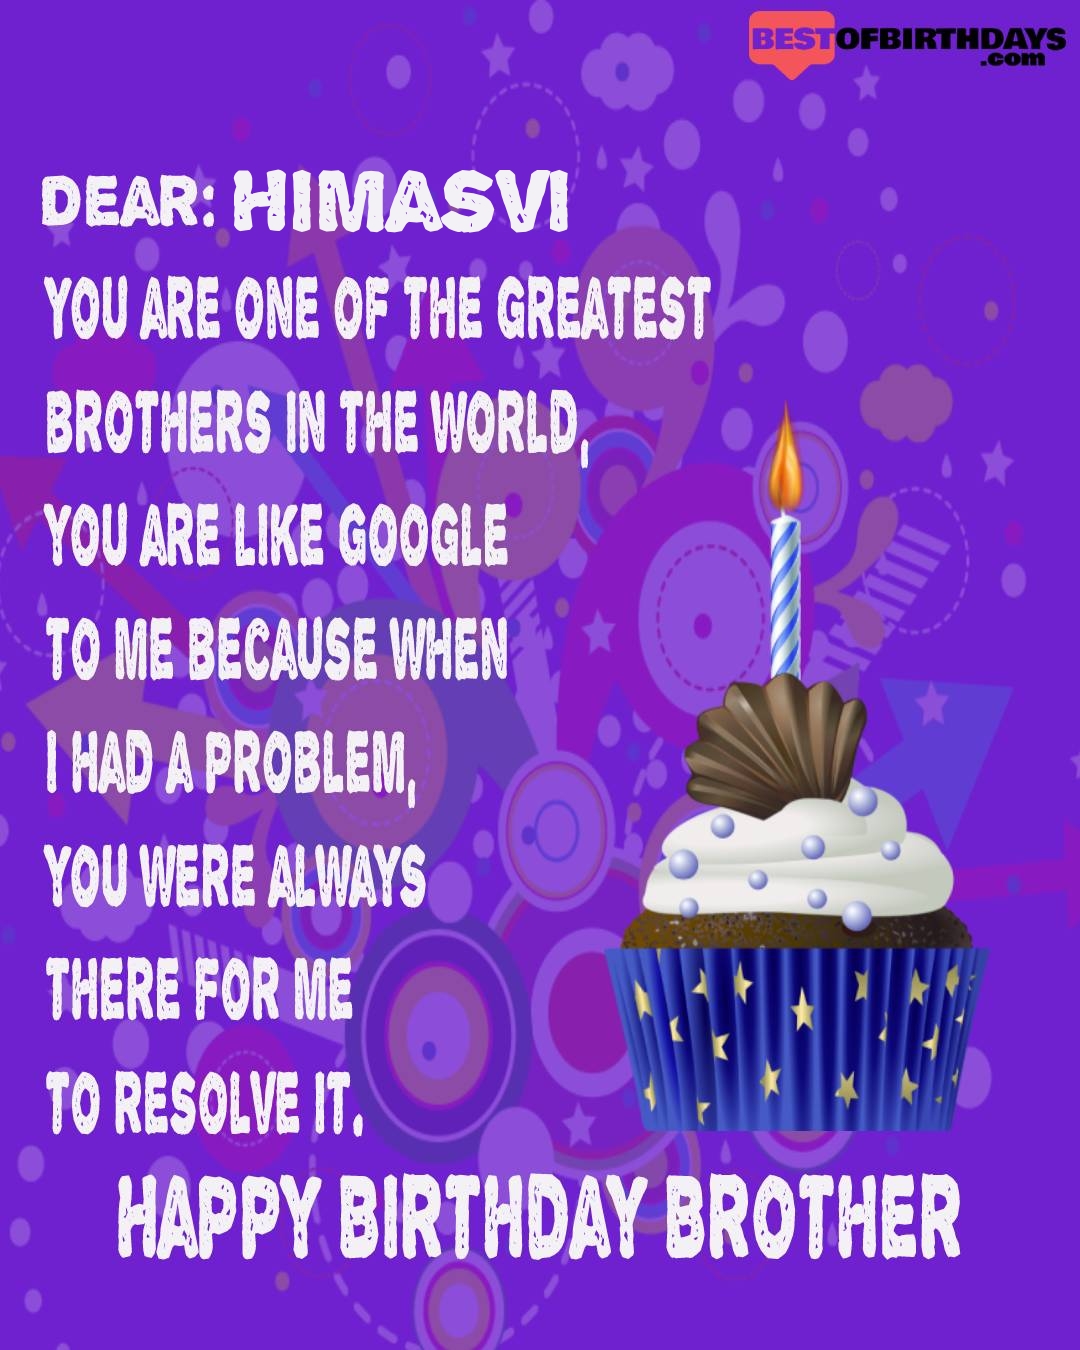 Happy birthday himasvi bhai brother bro